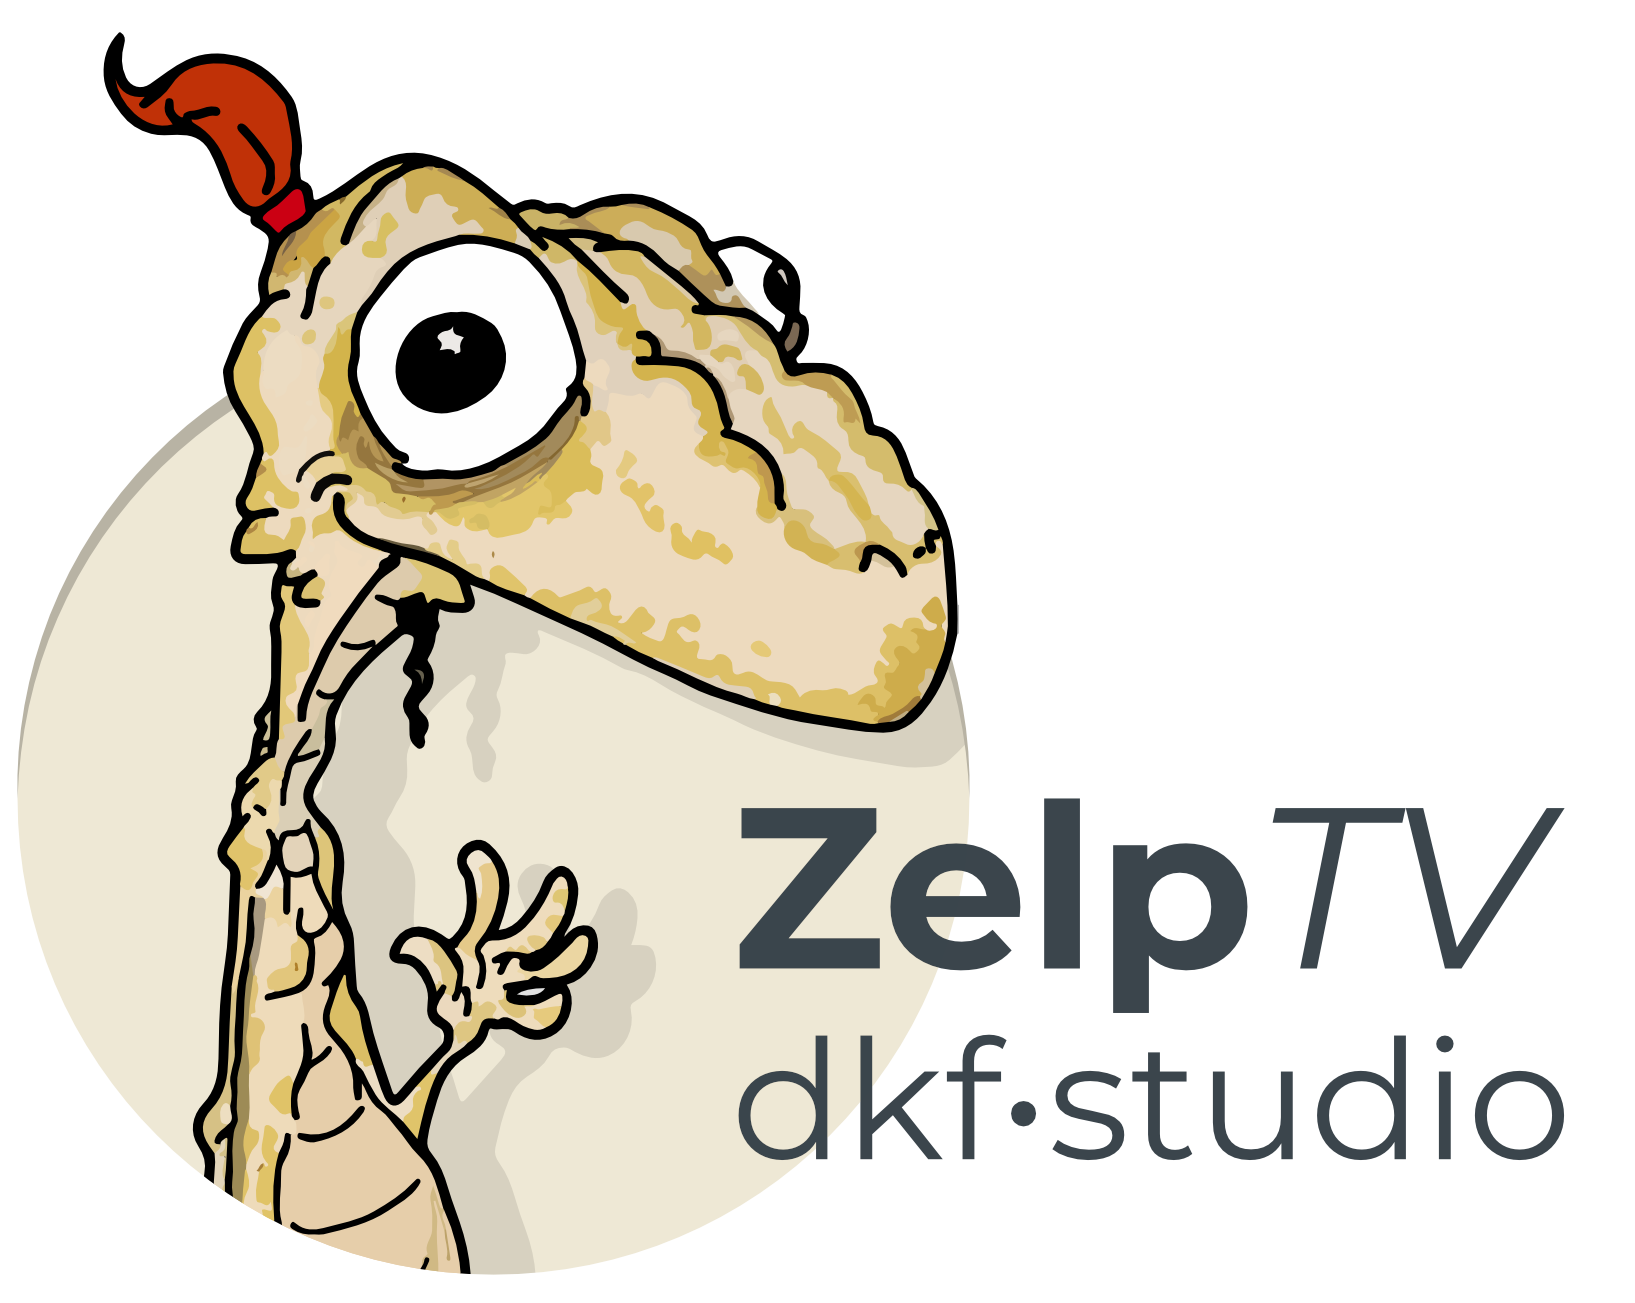 ZelpTV dkf.studio